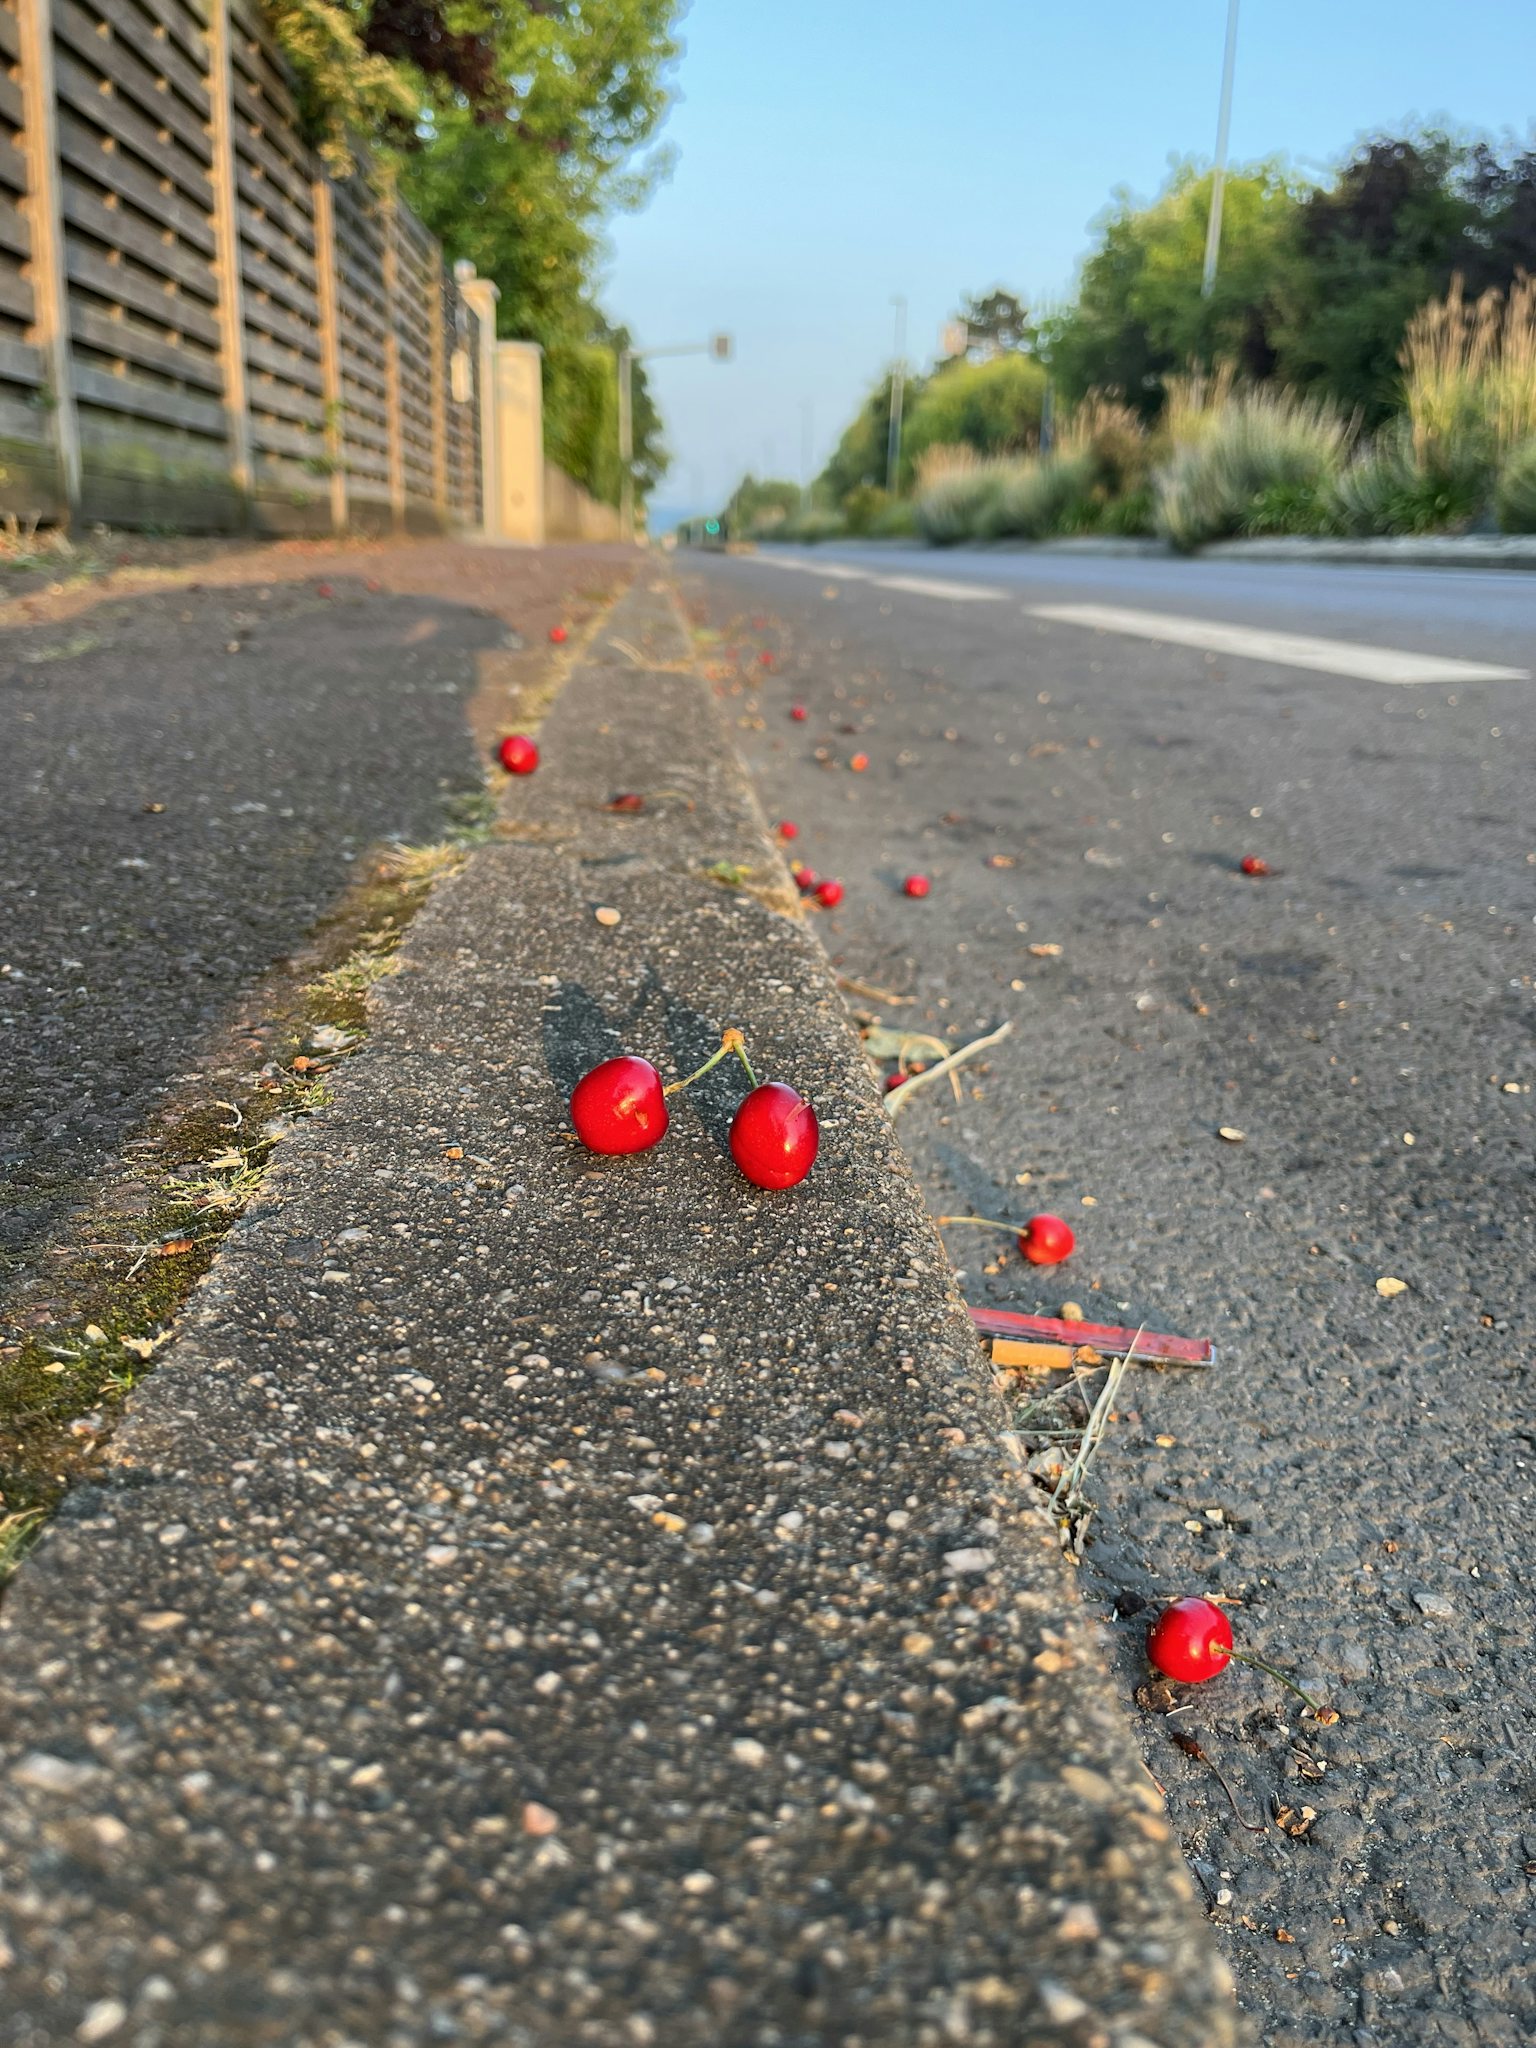 Cherries on the street